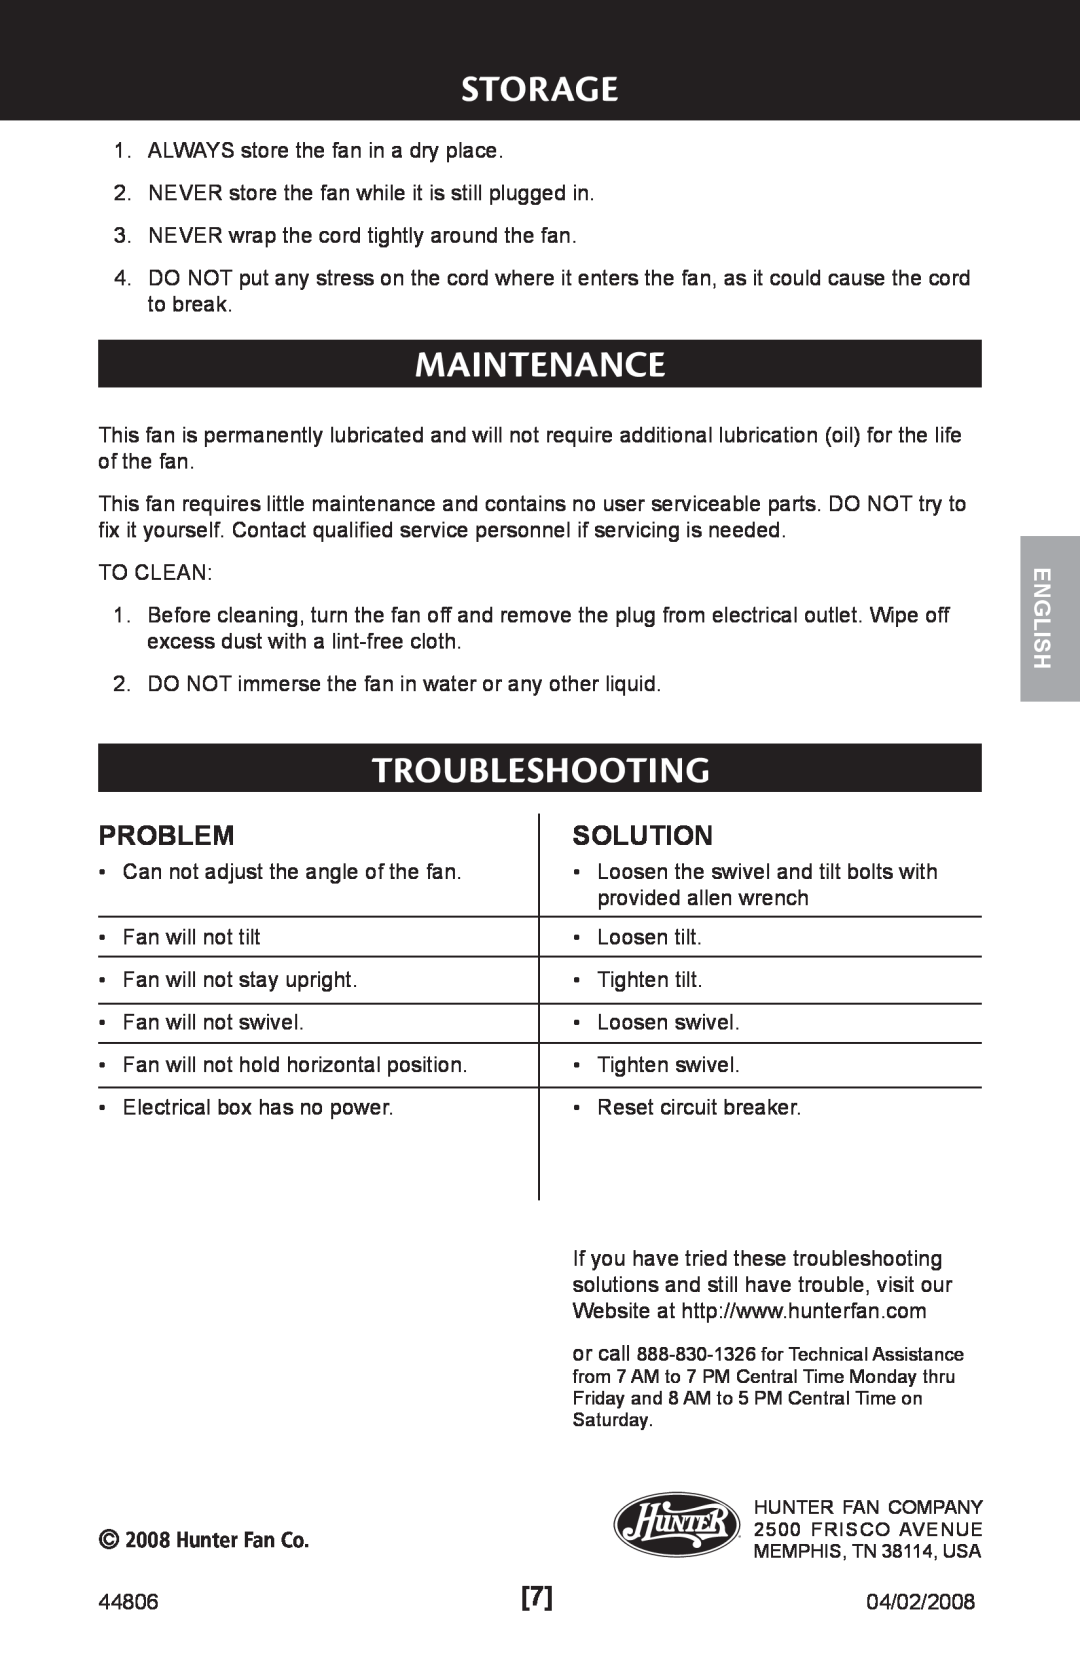 Hunter Fan 90245, 44806 manual Storage, Maintenance, Troubleshooting, Problem, Solution, Hunter Fan Co, English 